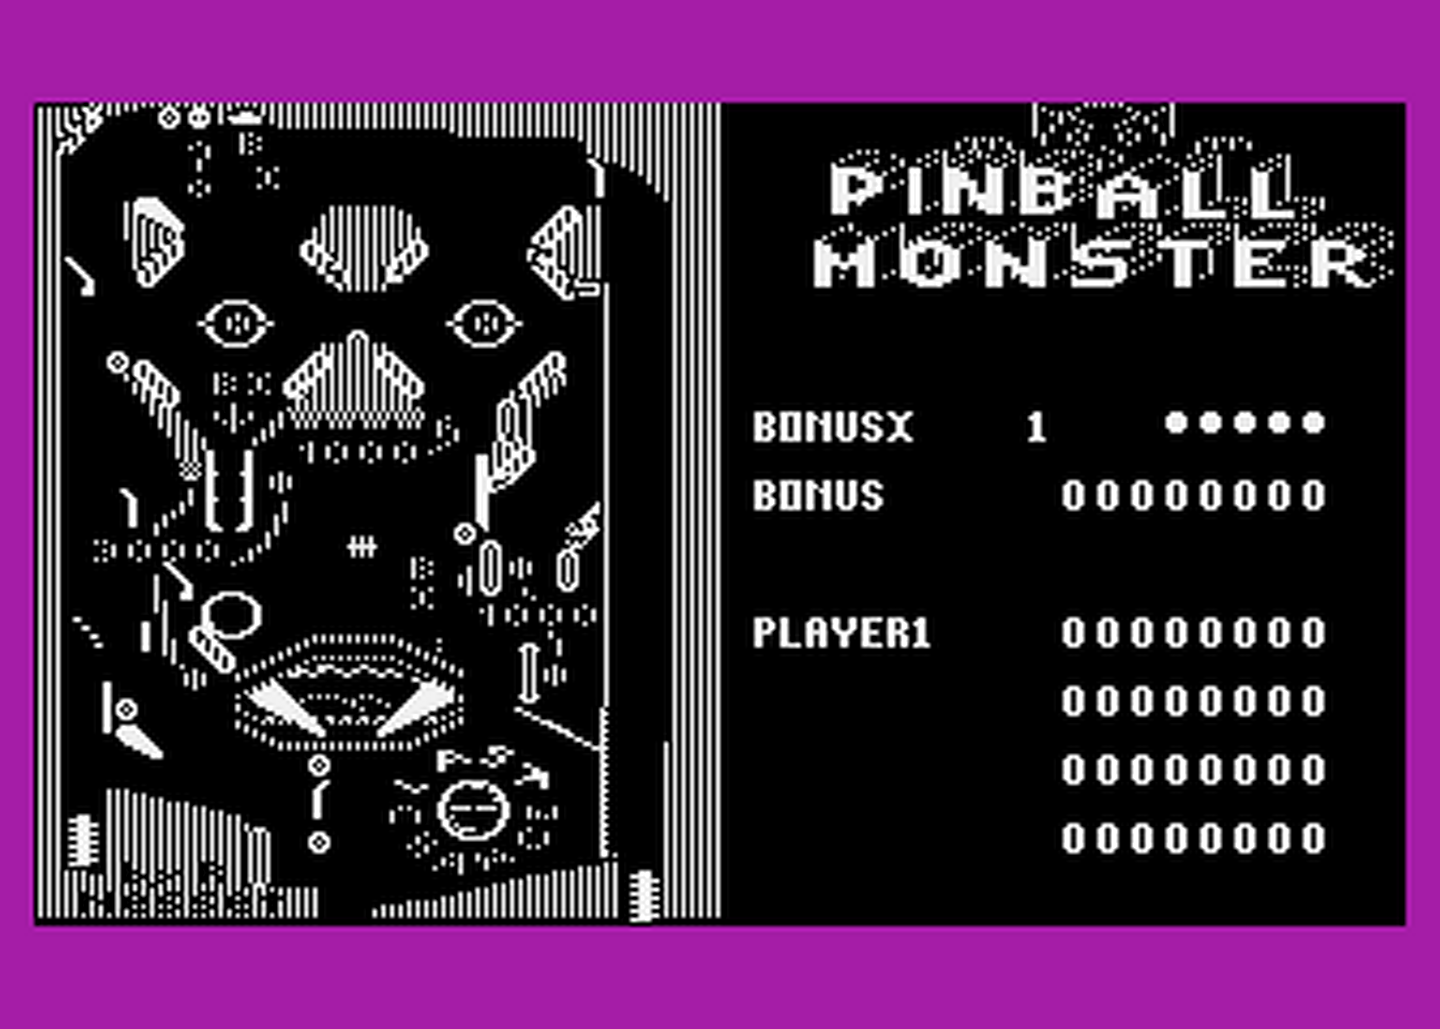 Atari GameBase PCS_-_Pinball_Monster (No_Publisher)